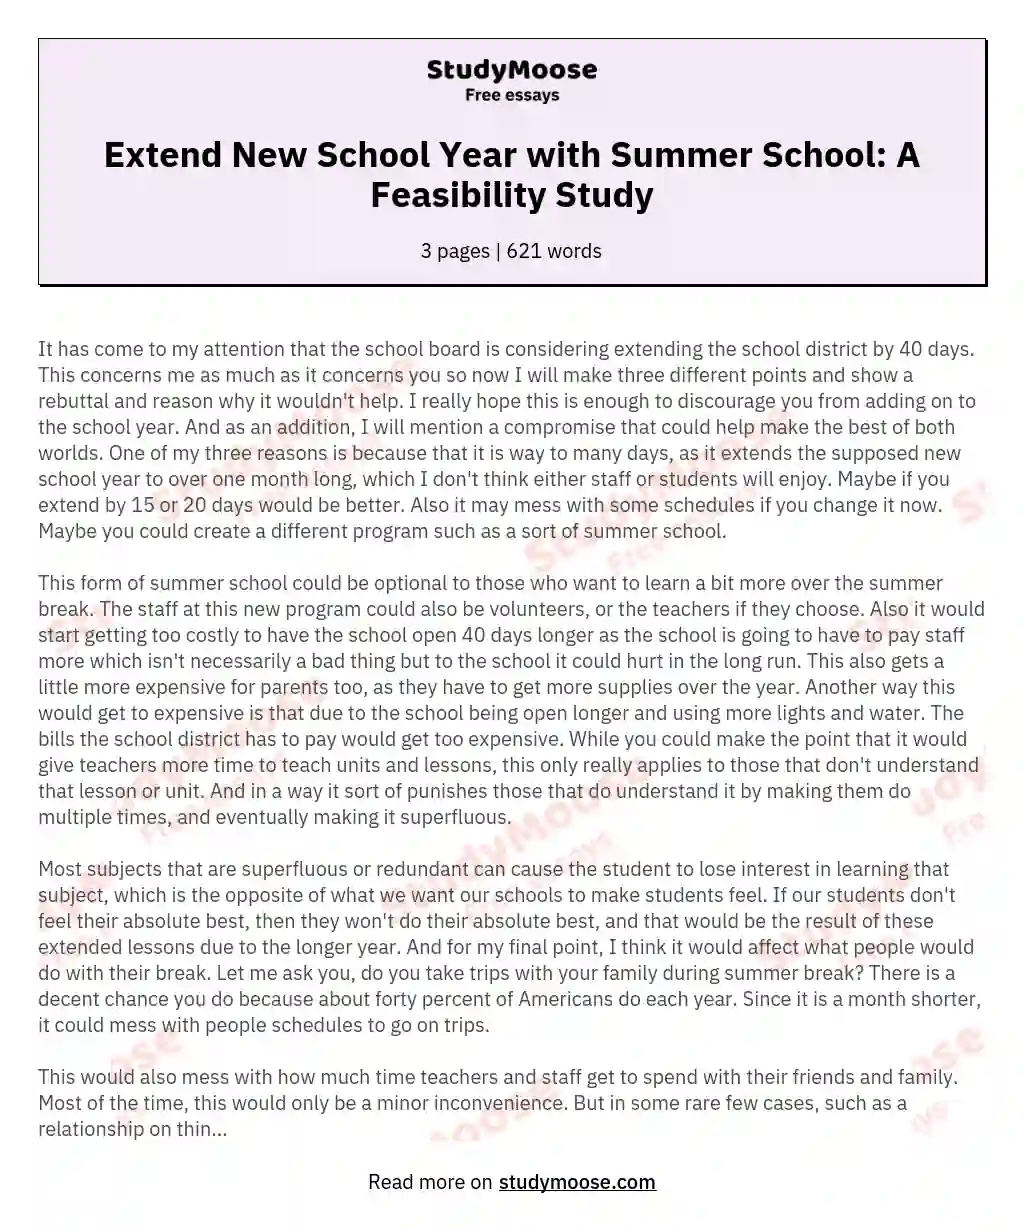 Extend New School Year with Summer School: A Feasibility Study essay